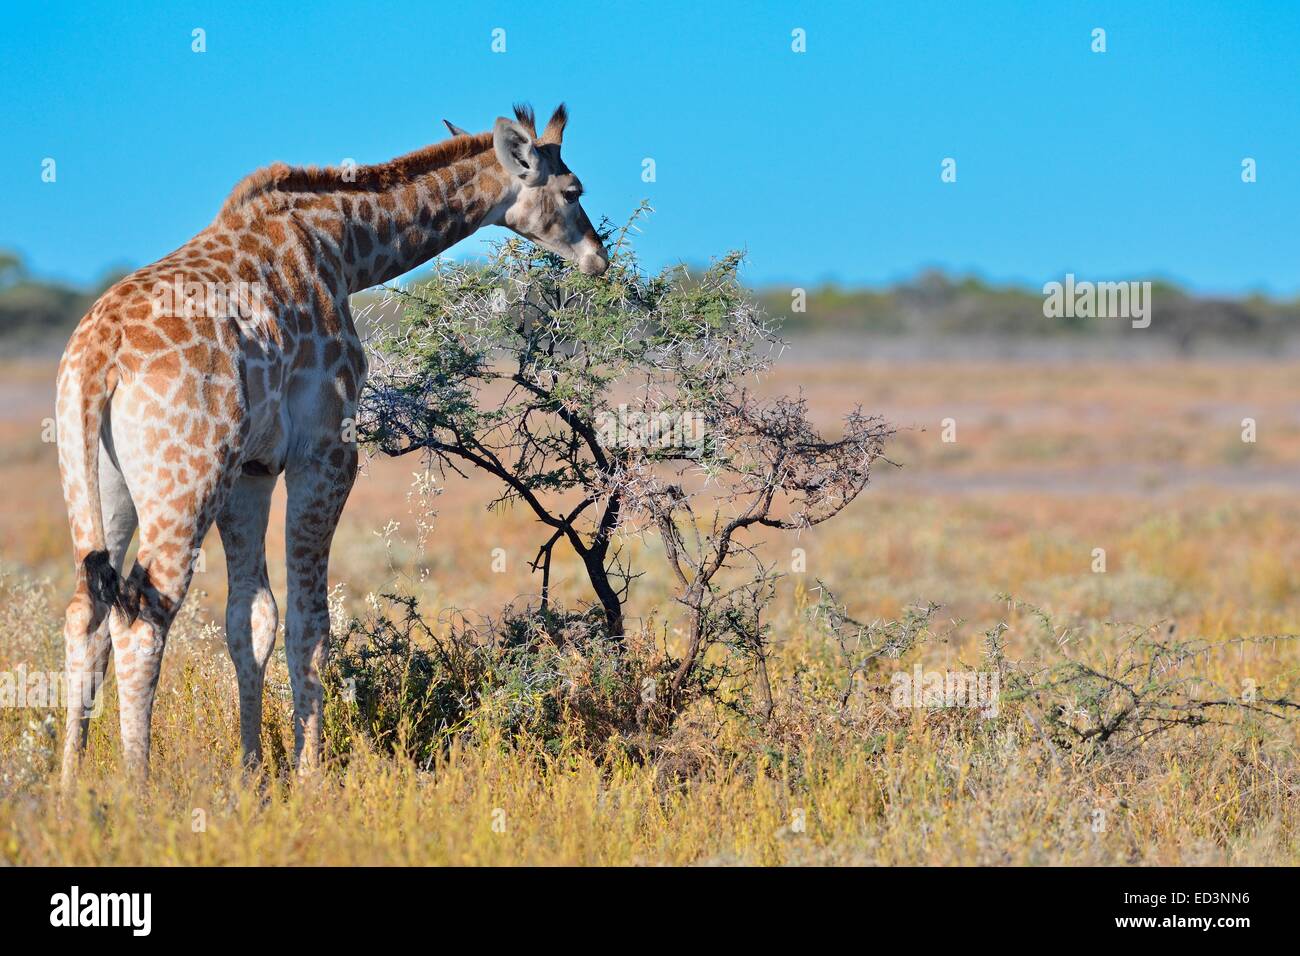 Young giraffe (Giraffa camelopardalis), feeding on leaves and thorns, Etosha National Park, Namibia, Africa Stock Photo